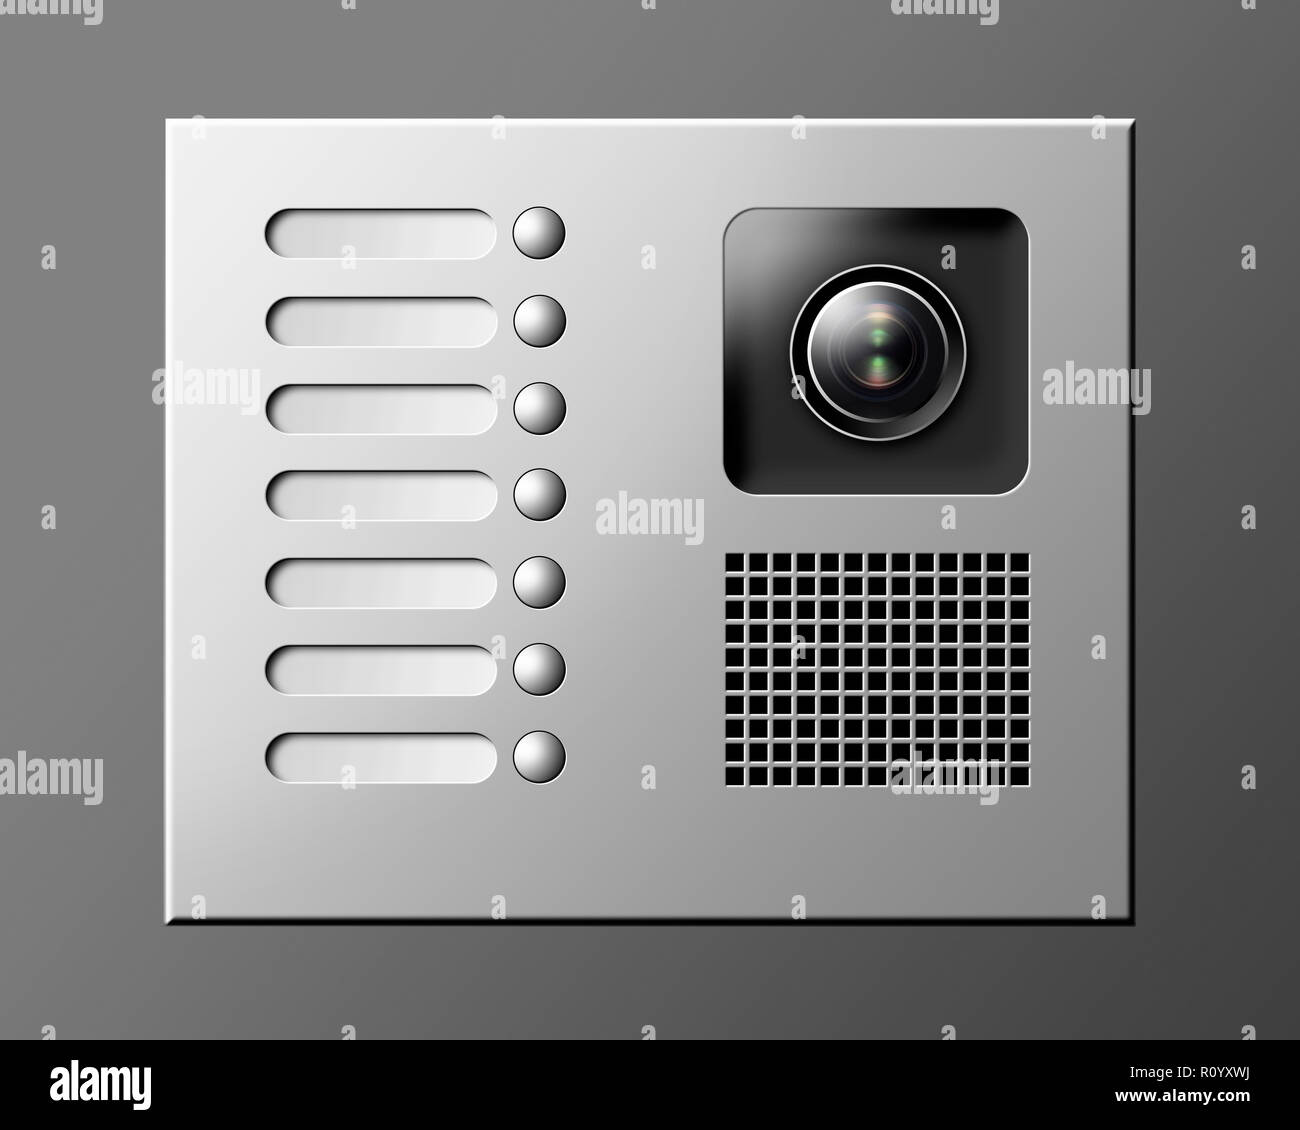 Intercomunicador inteligente fotografías e imágenes de alta resolución -  Alamy